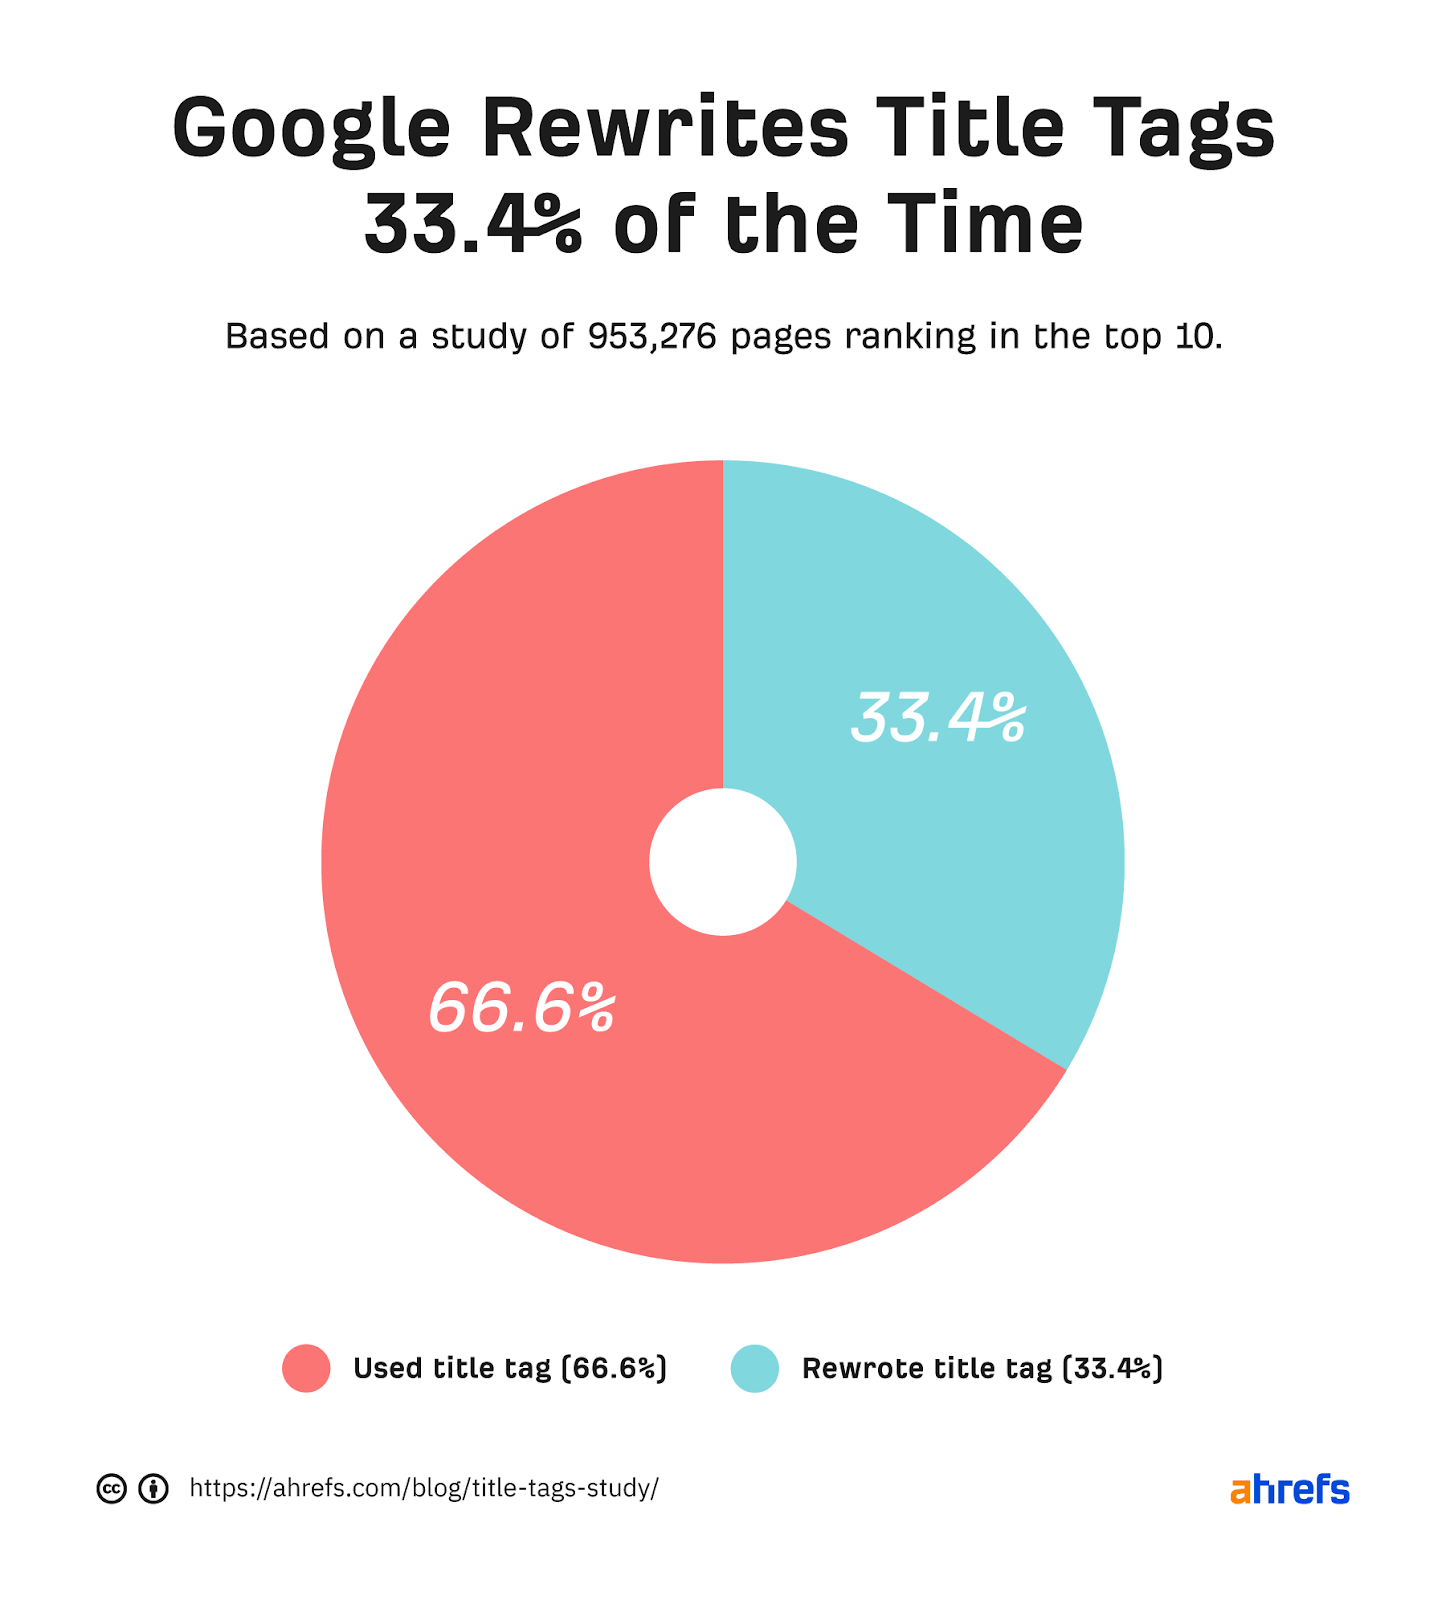 Google rewrites around a third of title tags